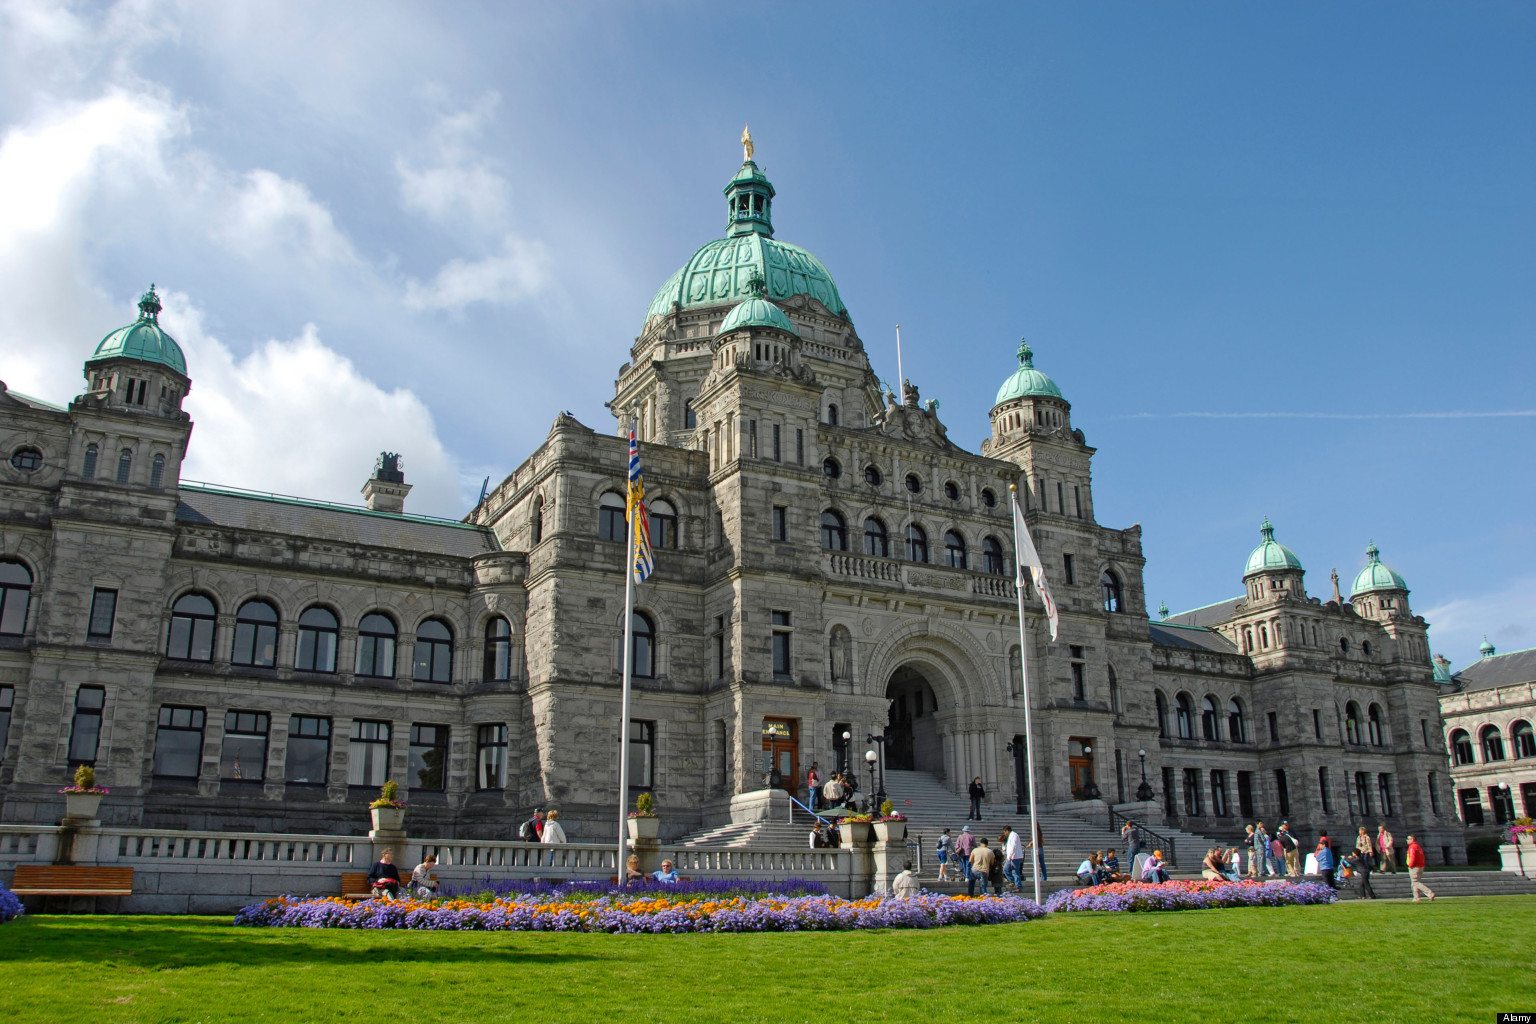 Parliament Buildings Legislative Assembly Victoria British Columbia BC Canada neo baroque design architect Francis Rattenbury